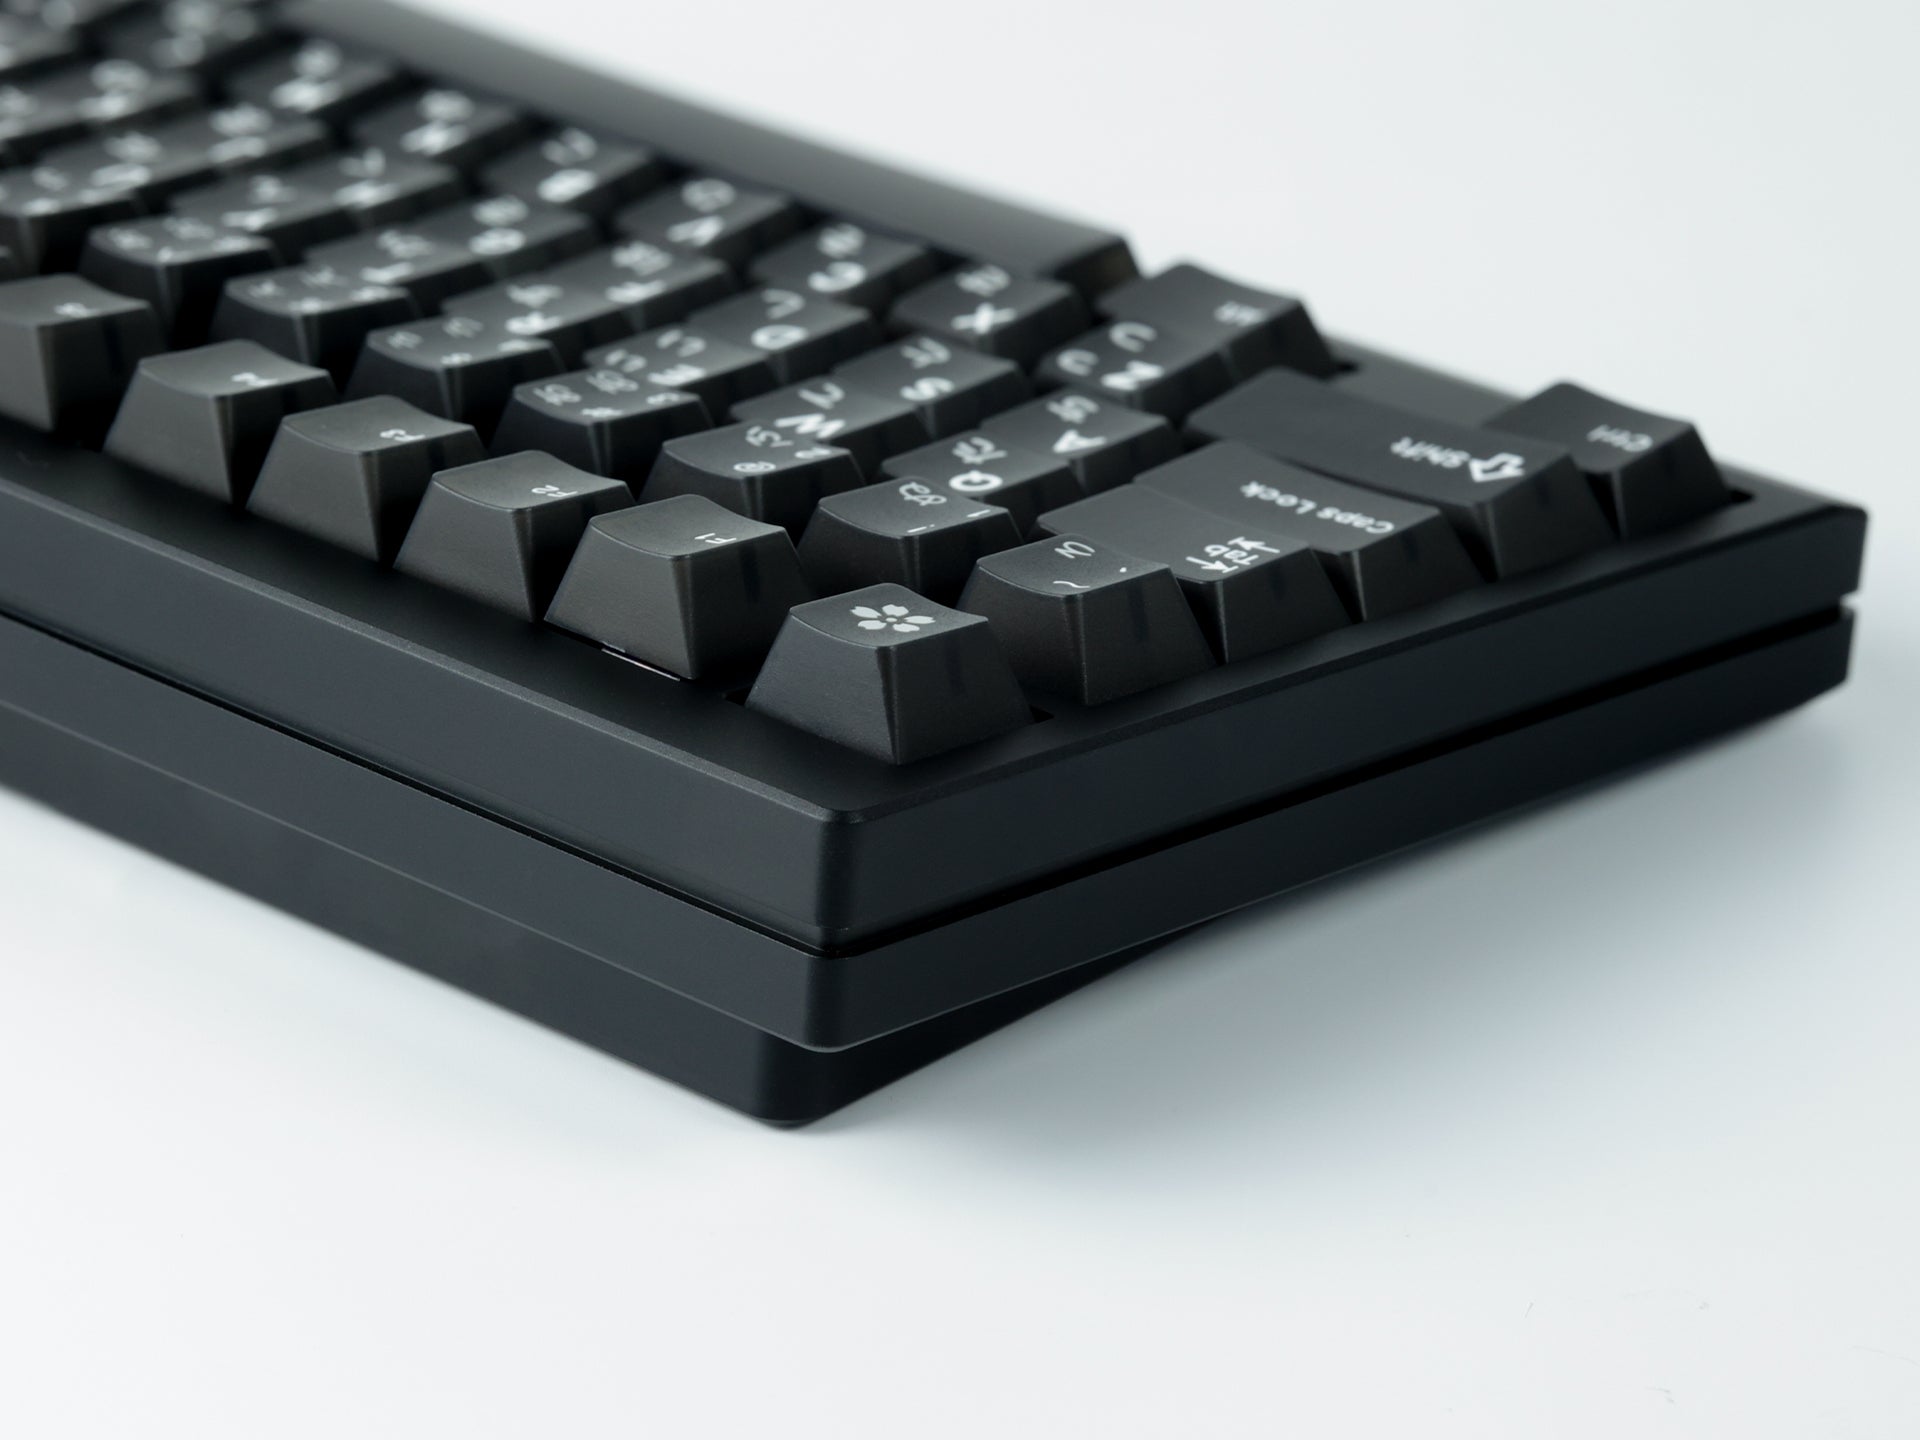 Leo80 QMK Mechanical Keyboard Kit